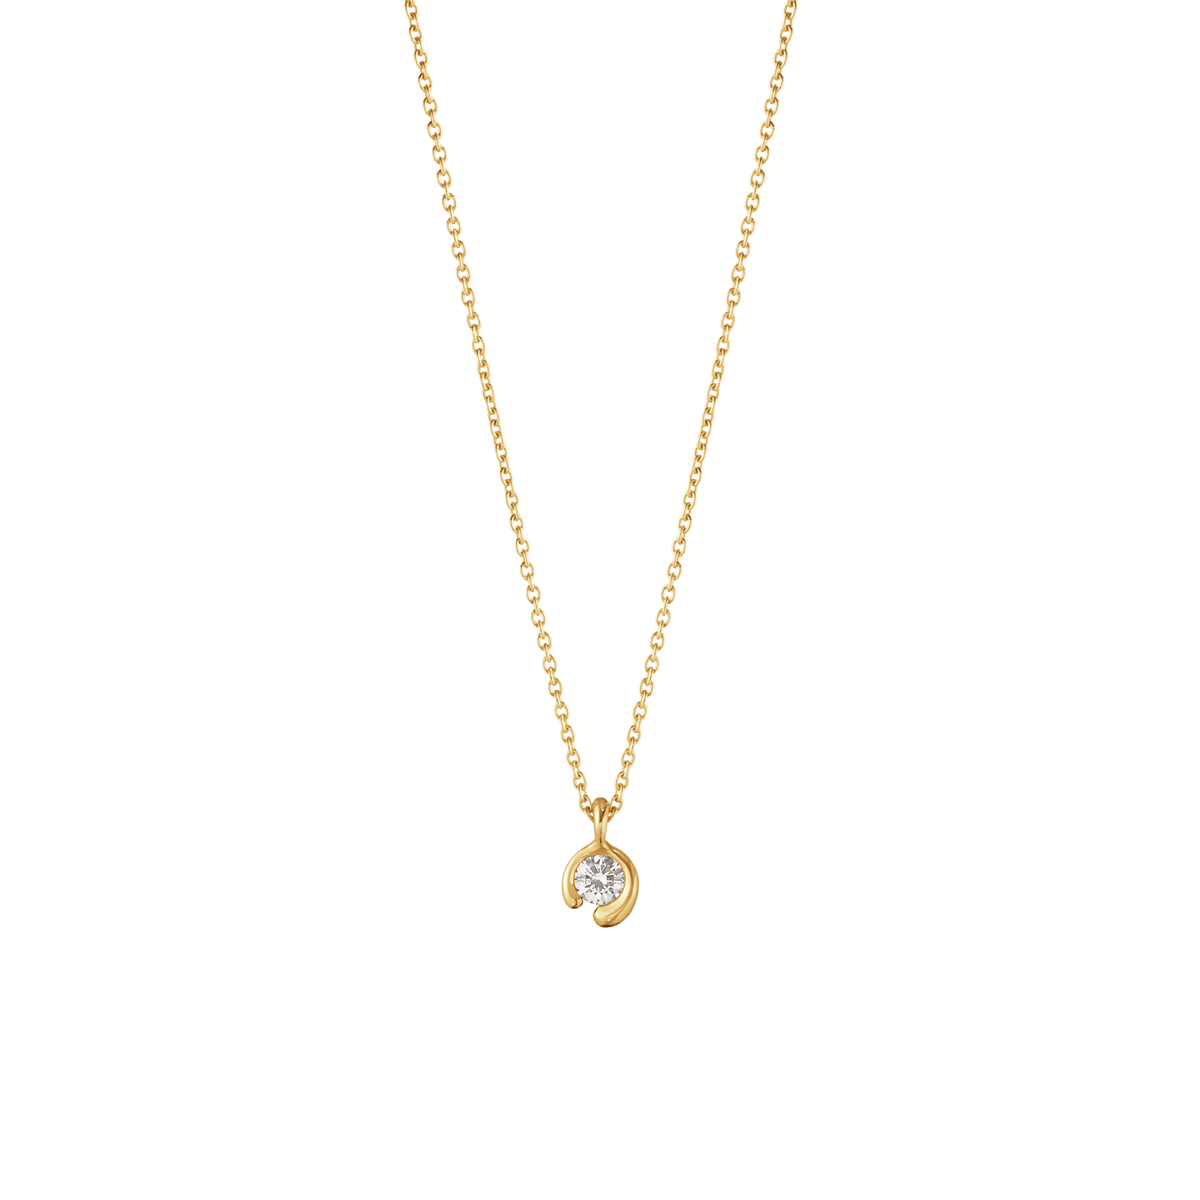 georg jensen 18ct yellow gold mercy solitaire diamond pendant and chain 010ct 20001084